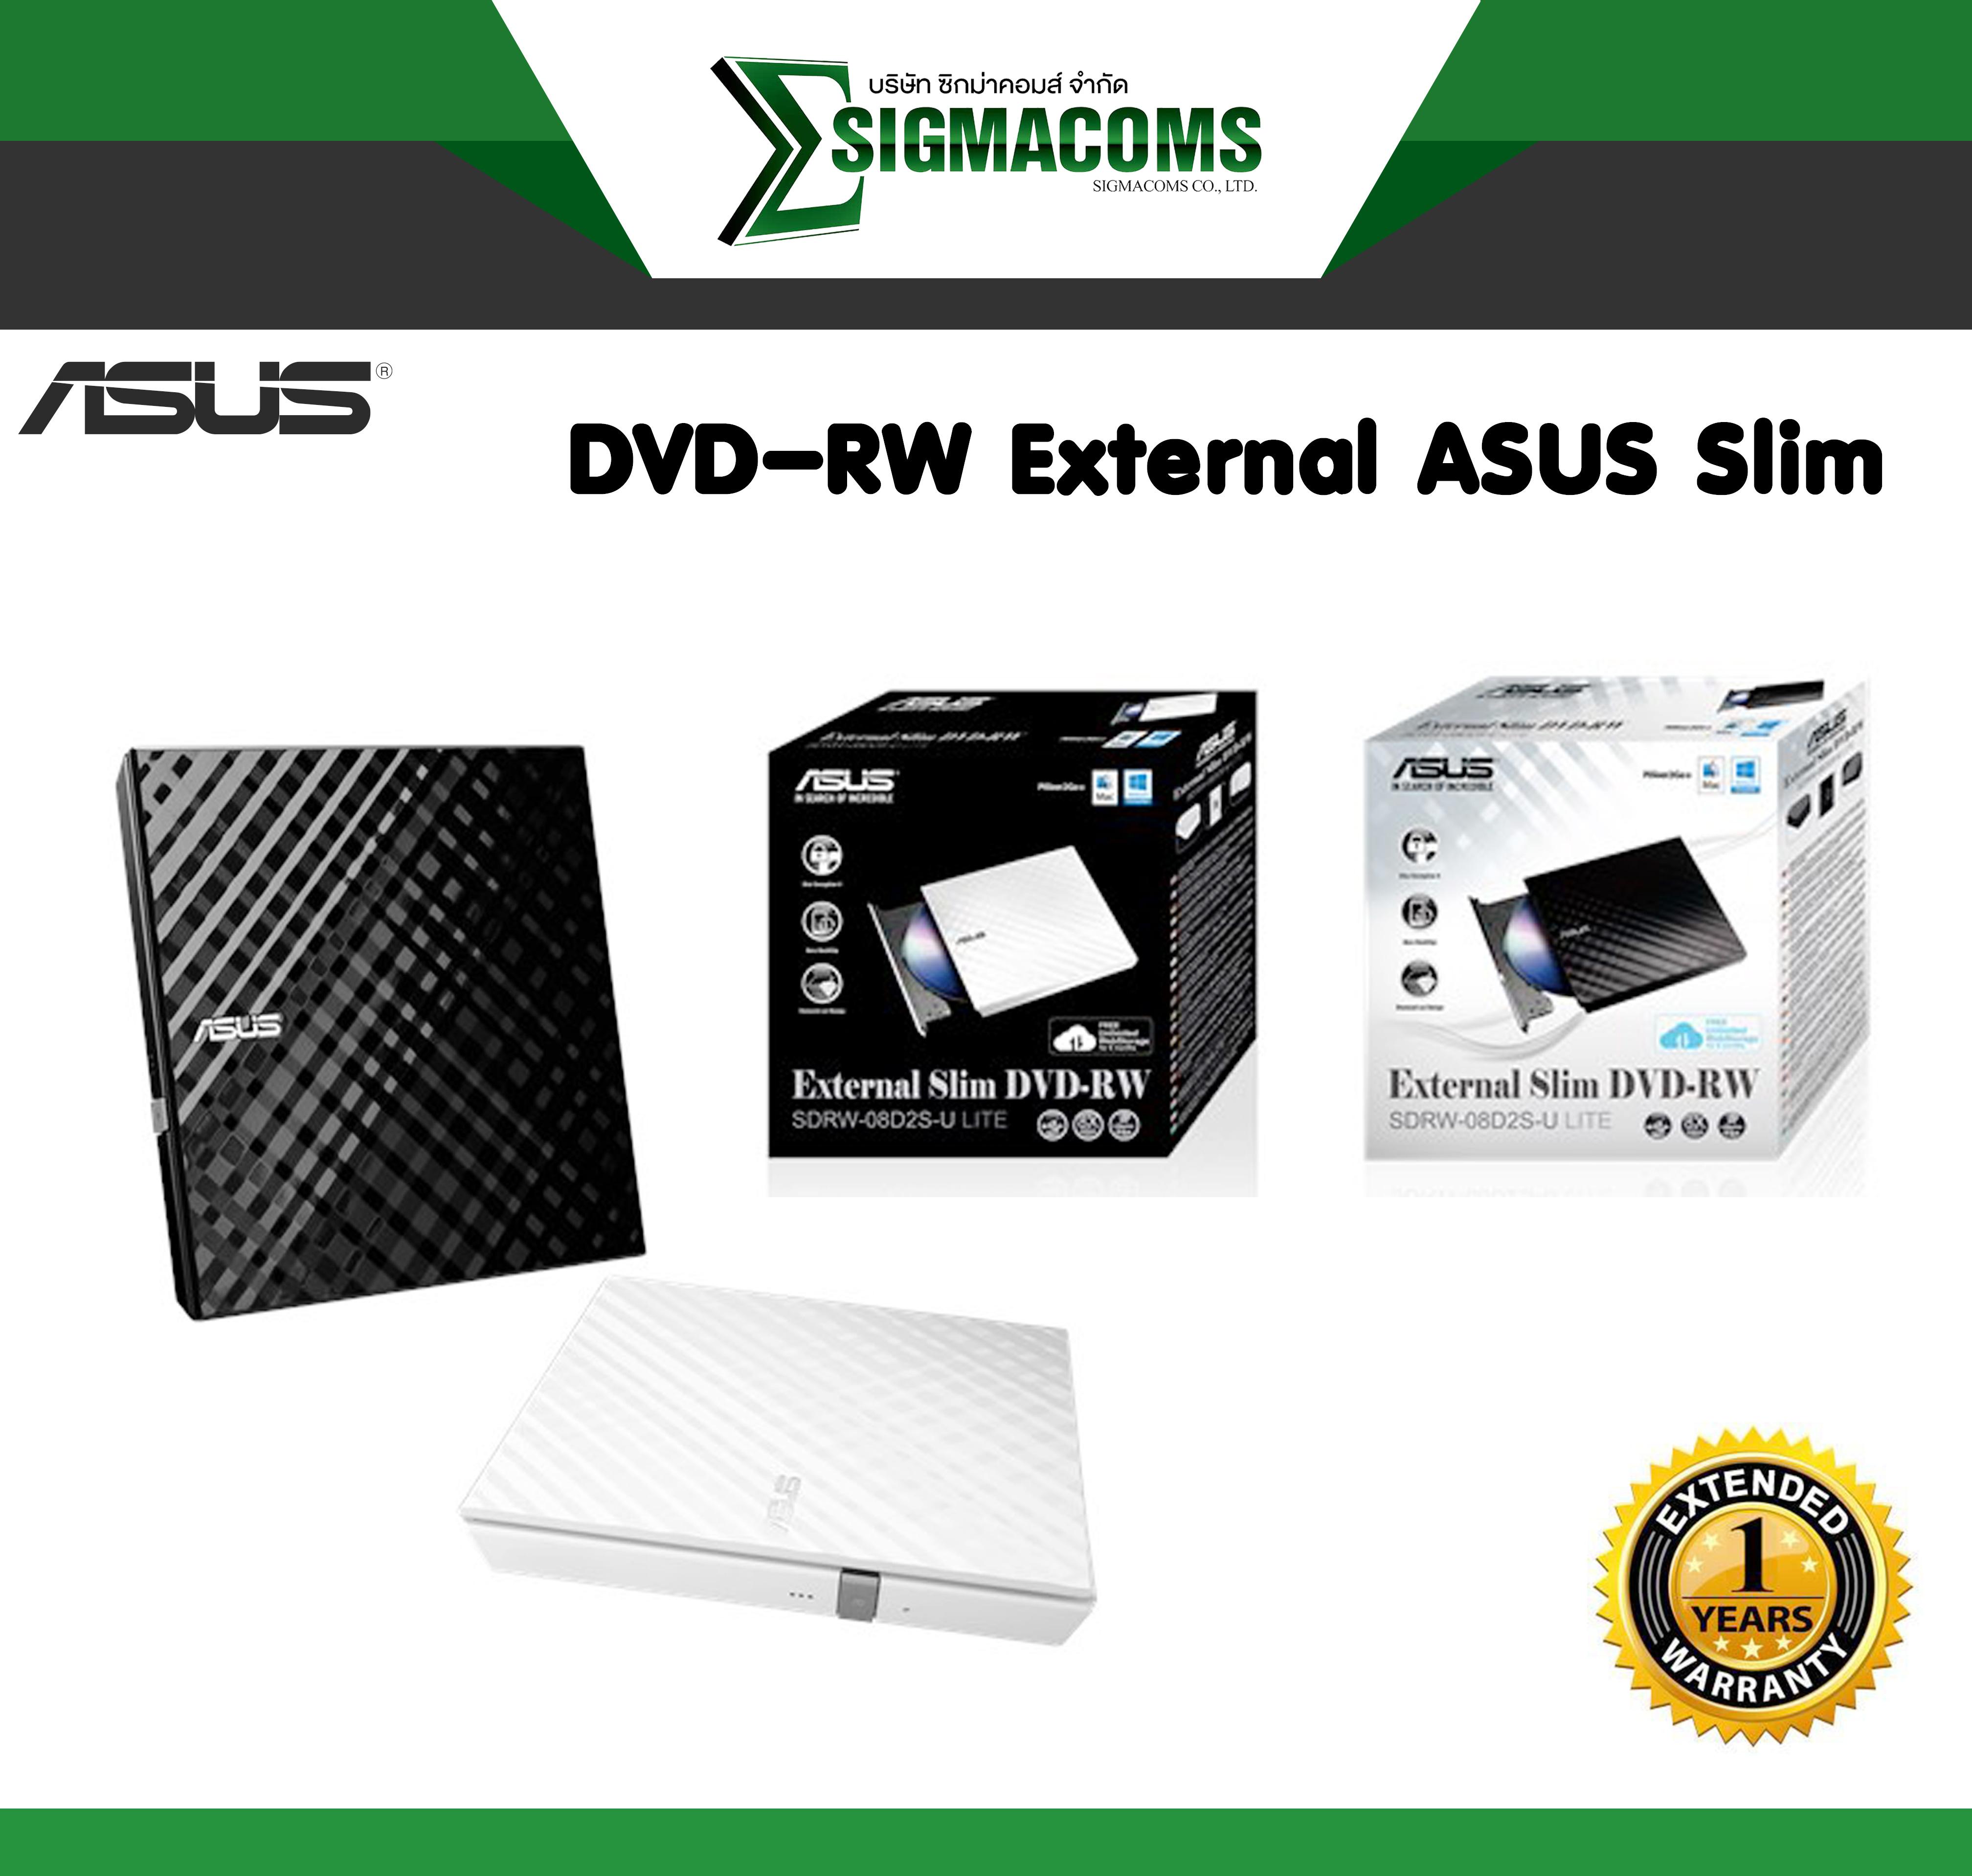 DVD-RW External ASUS Slim 8x USB 2.0 ของใหม่ !! ประกัน 1 ปี